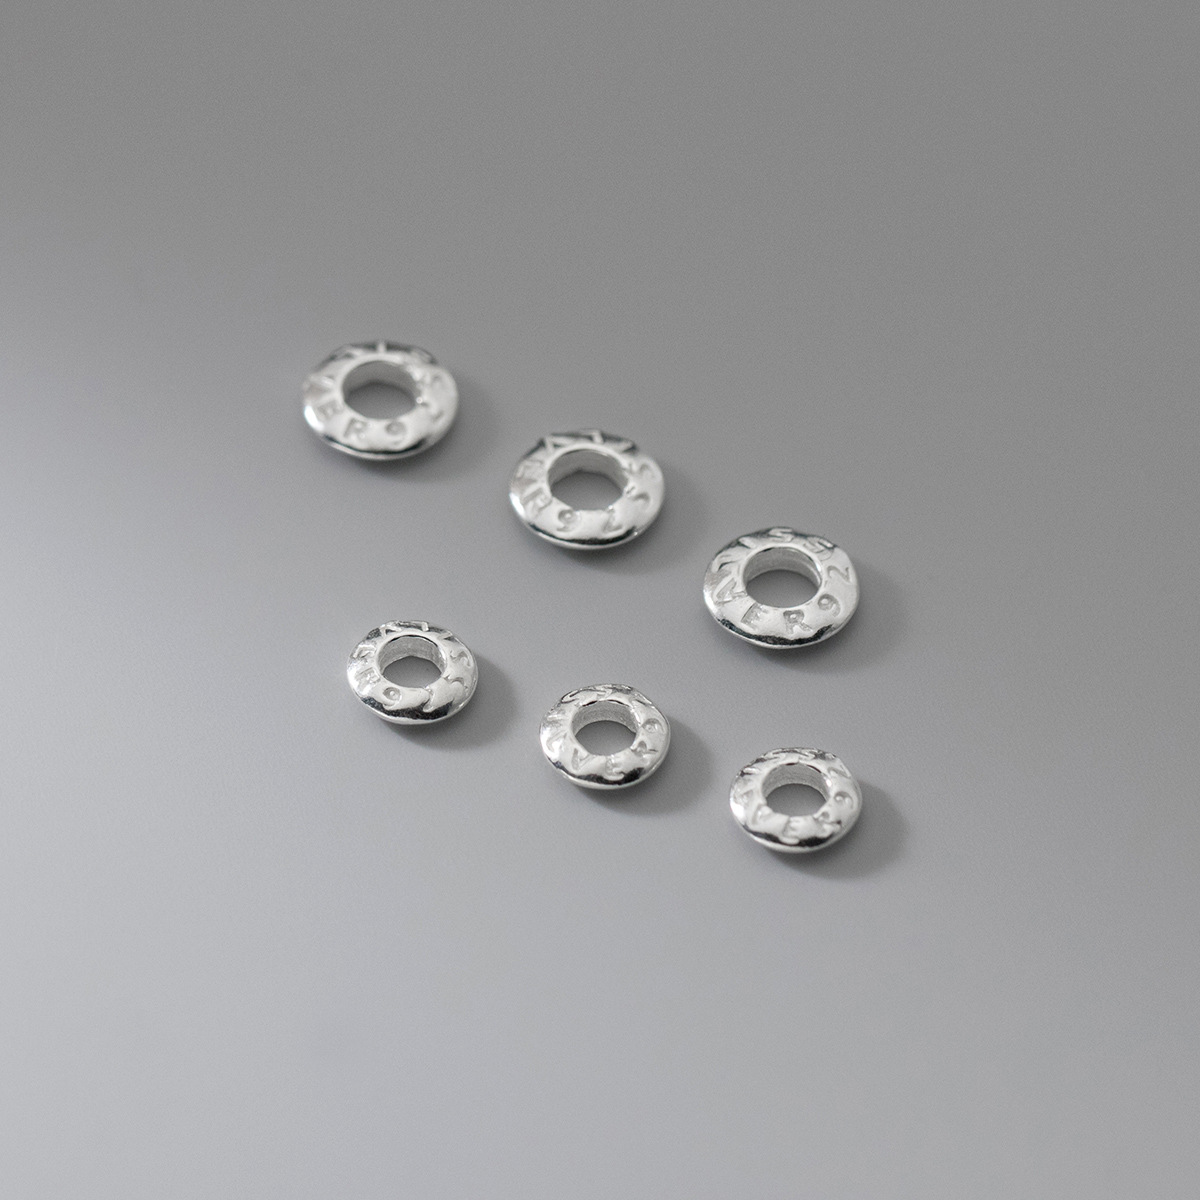 Plain silver, 6 mm in diameter